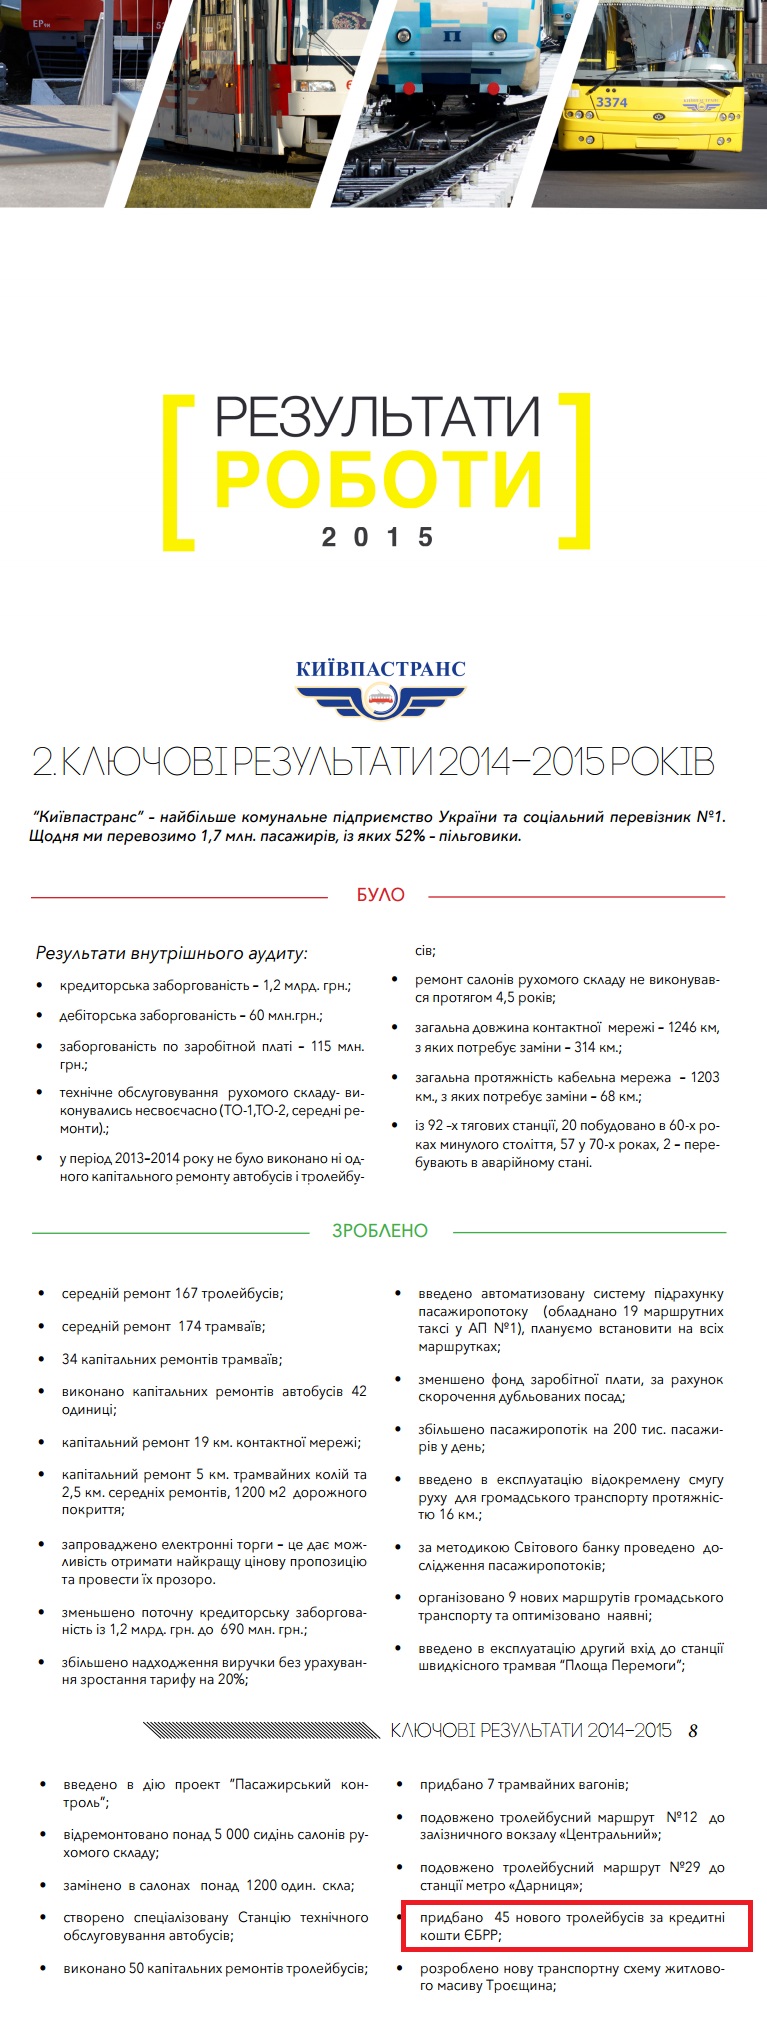 http://kpt.kiev.ua/files/finances/zvit2015finale.pdf